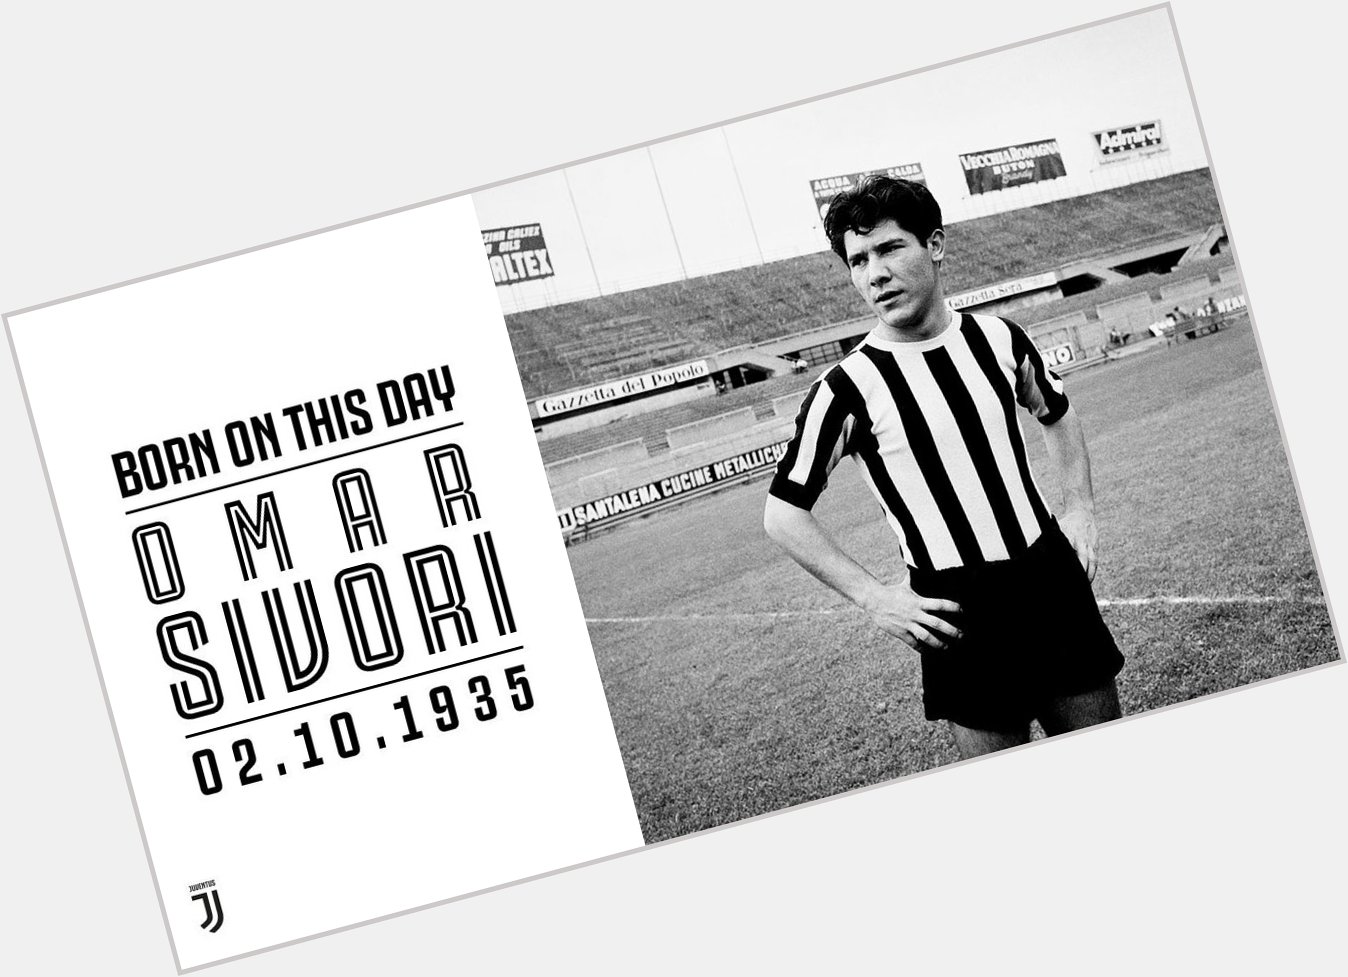 Happy Birthday to the 1961 Ballon D Or winner Omar Sivori! 
